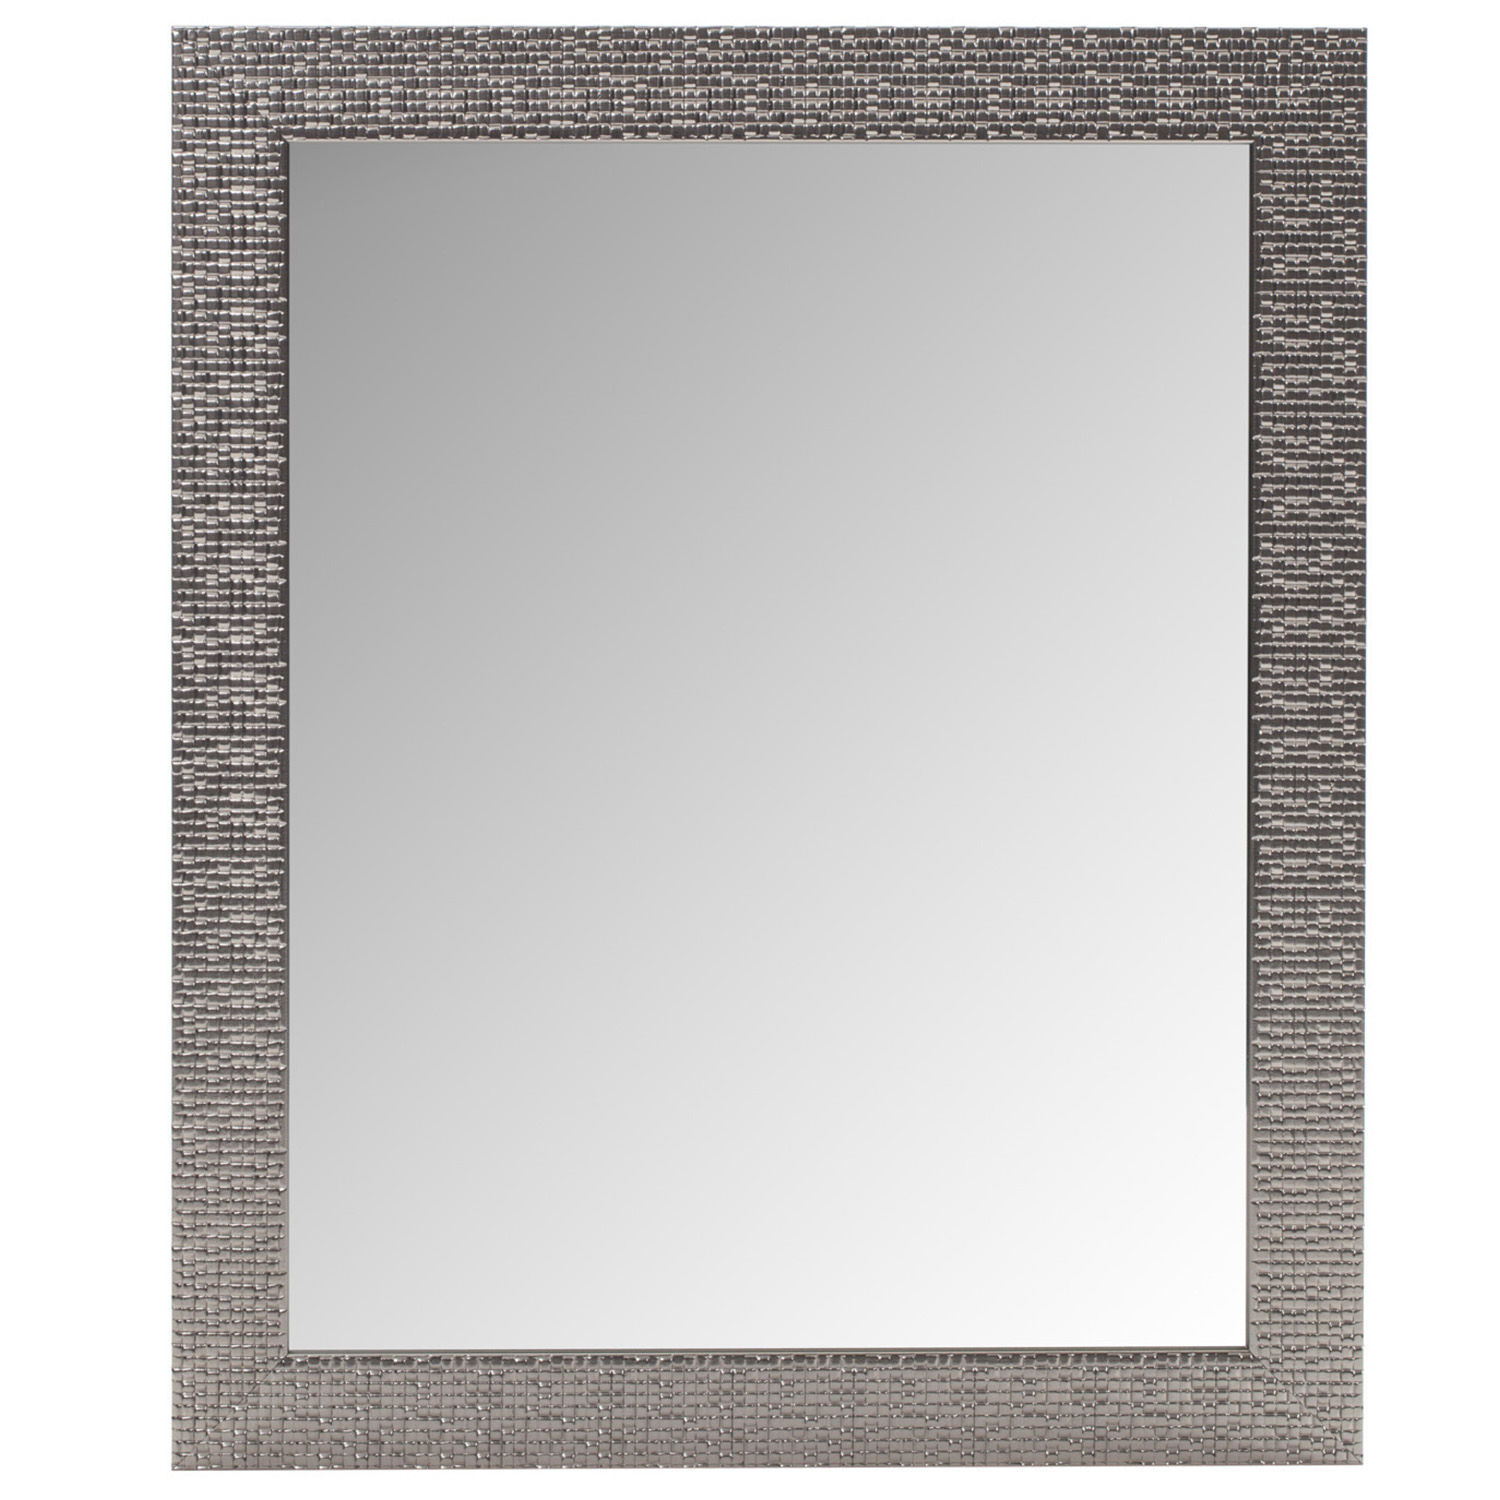 Silver Mosaic Effect Wall Mirror Image